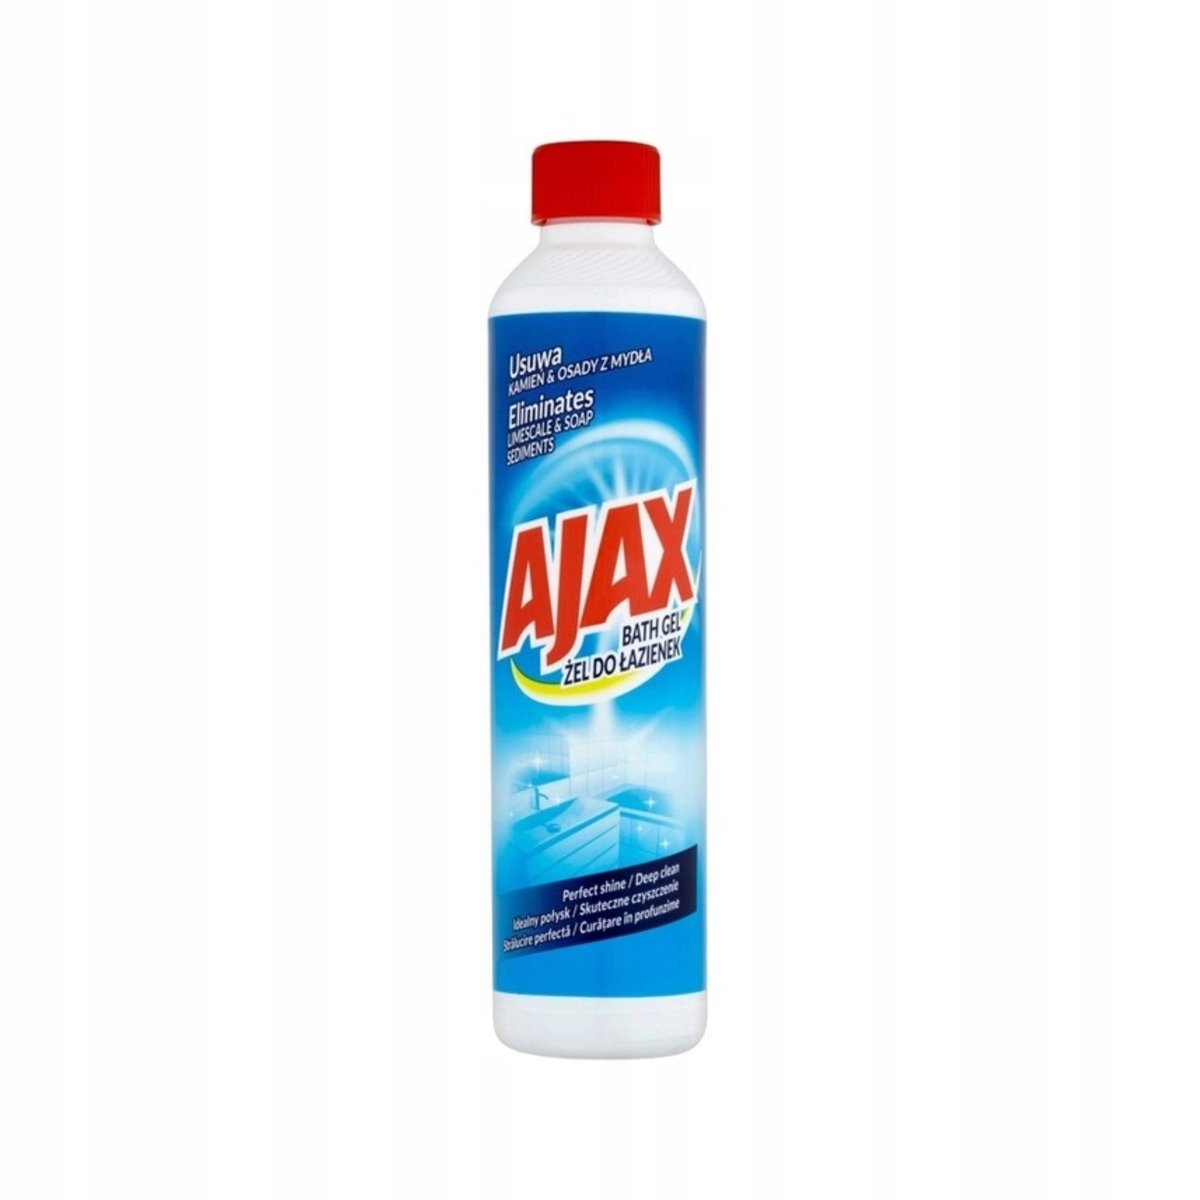 AJAX Ajax Żel do łazienek 500 ml